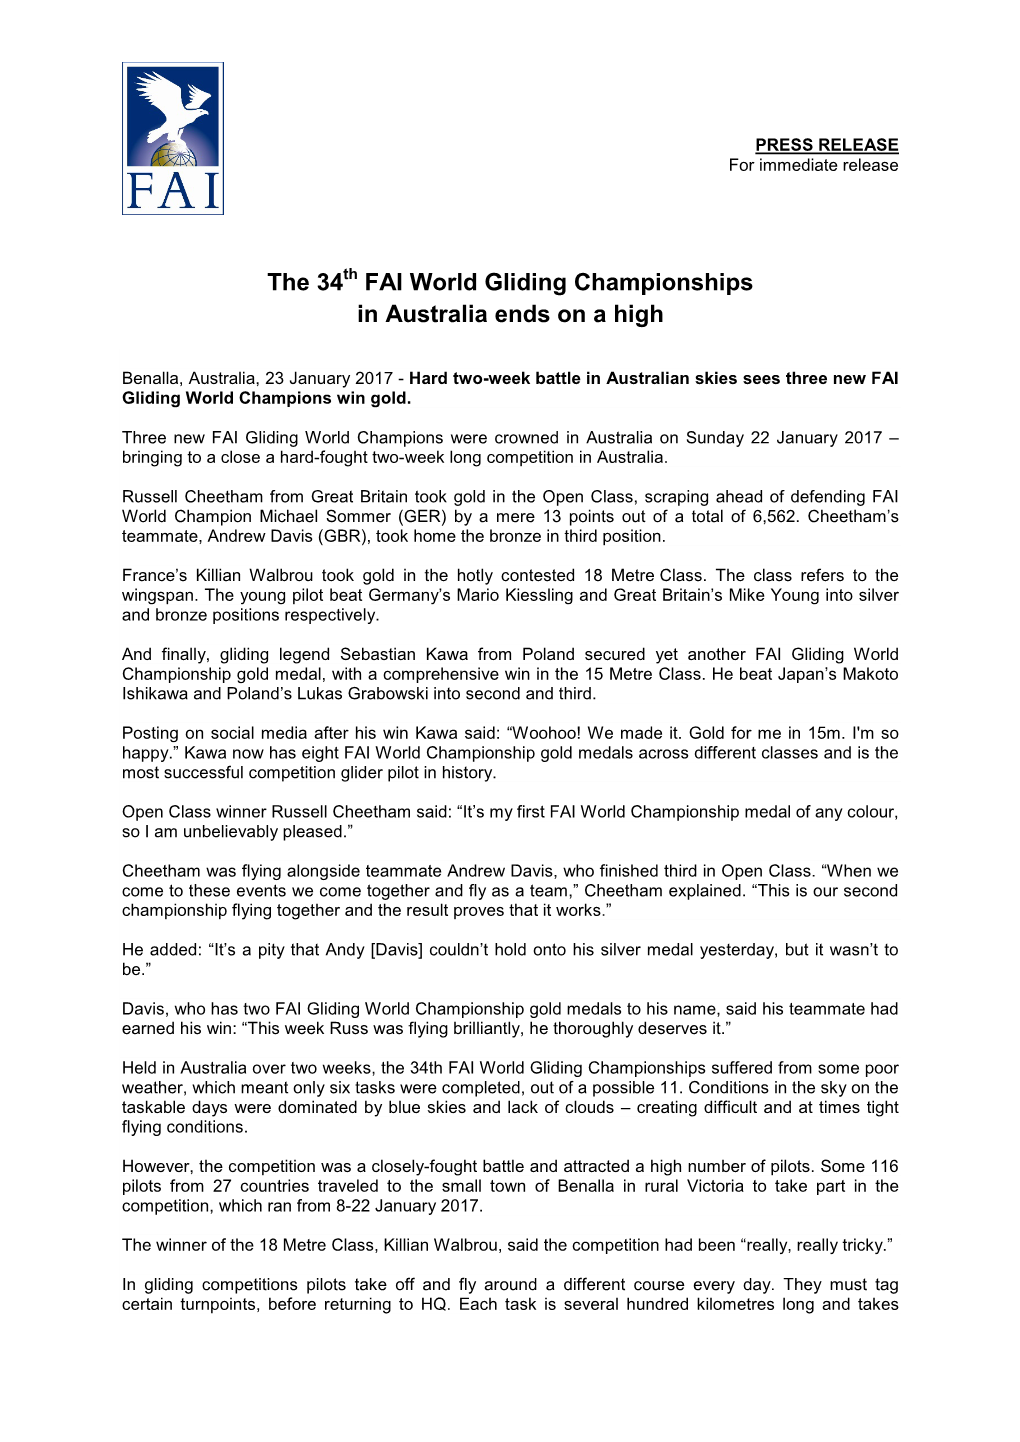 The 34 FAI World Gliding Championships in Australia Ends